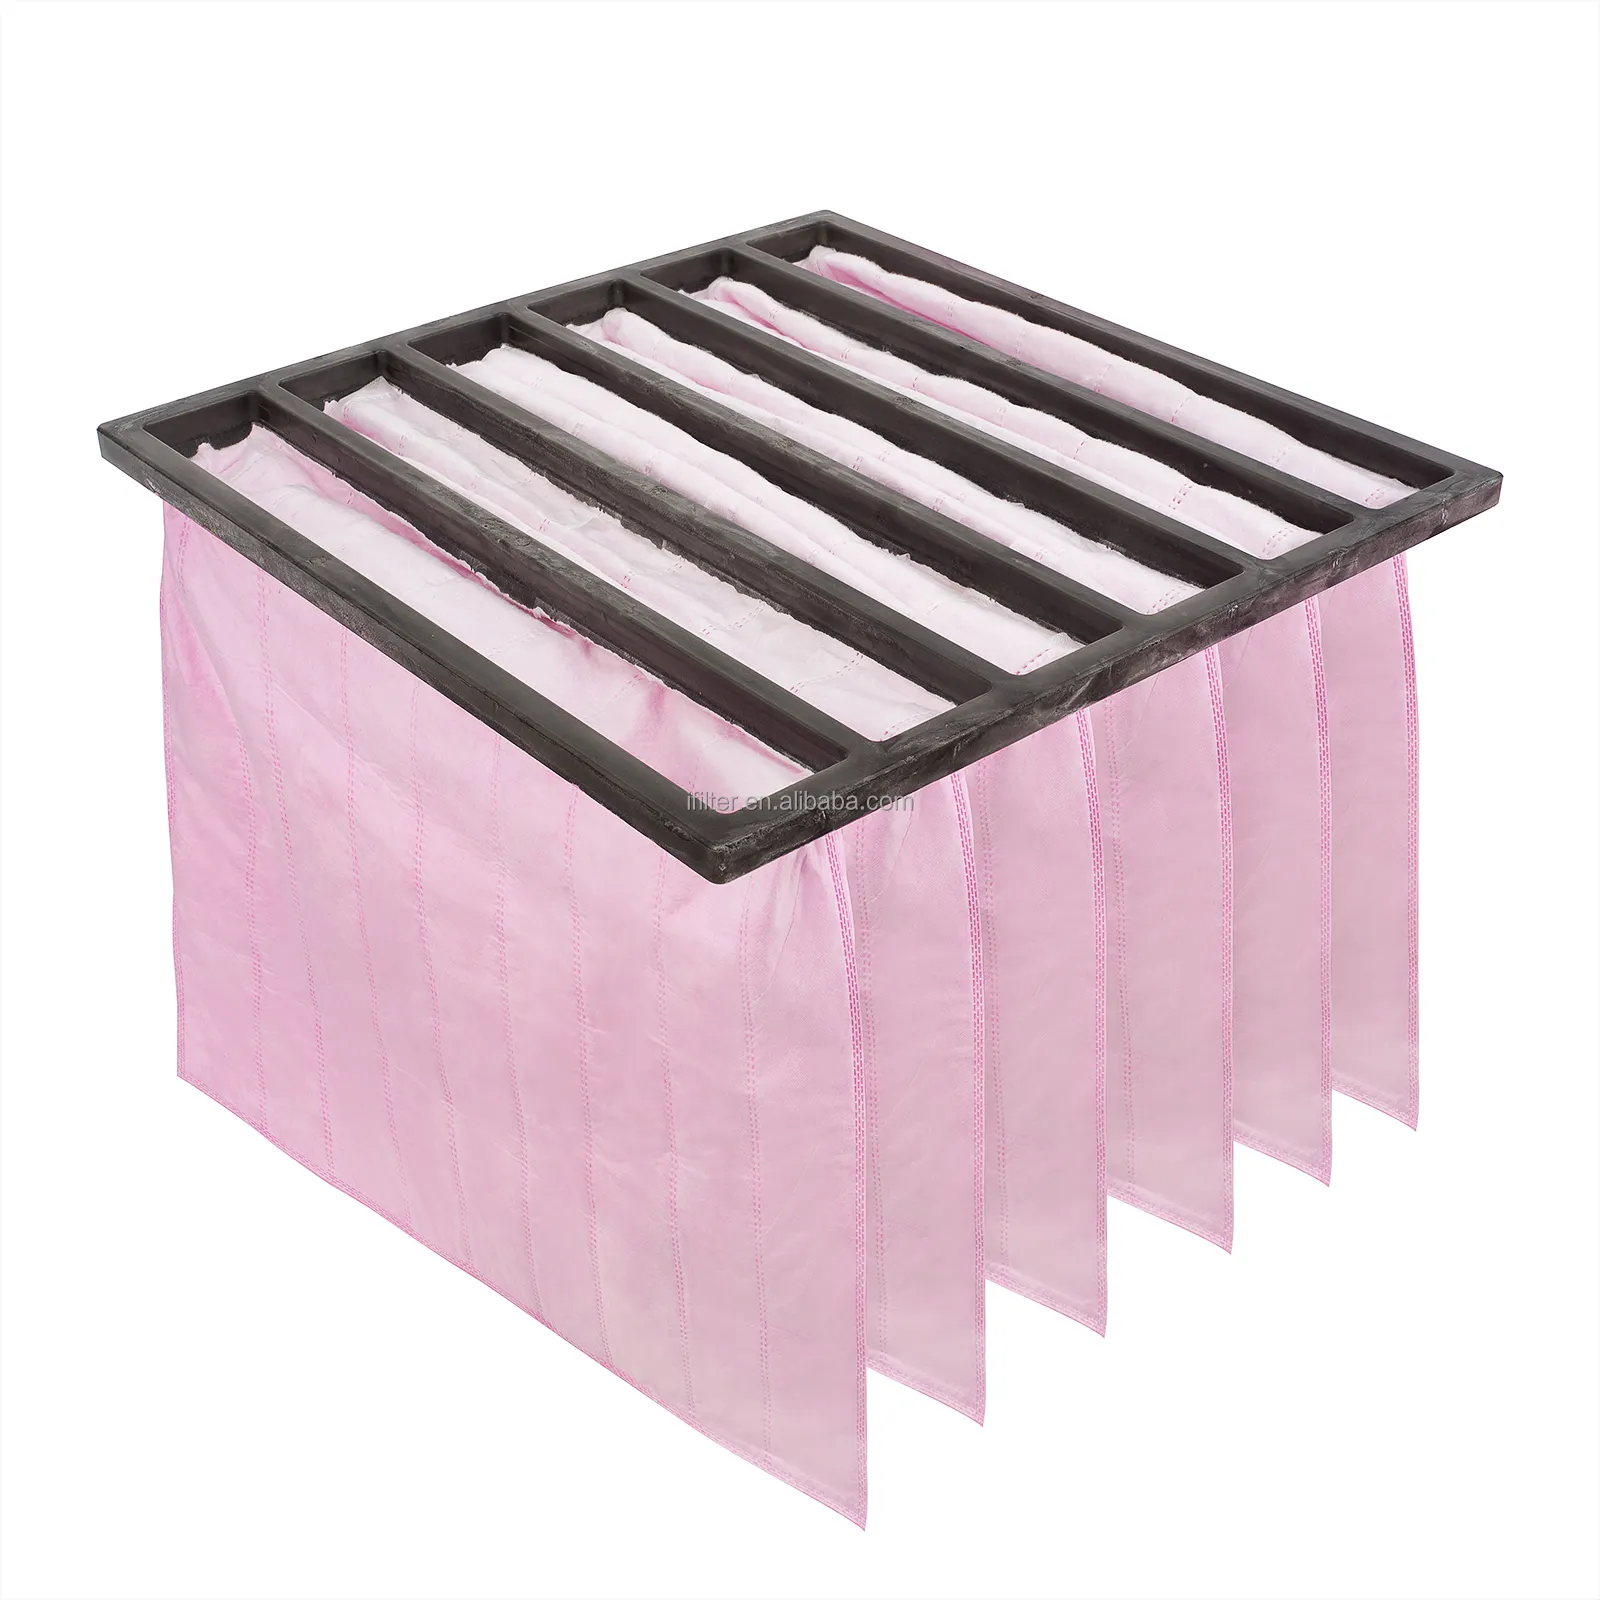 AiFilter Wasch barer Kunstfaser-Industria-Beutel filter Kunststoff rahmen F7 Luftfilter mit mittlerer Wirkung 592*592*600mm